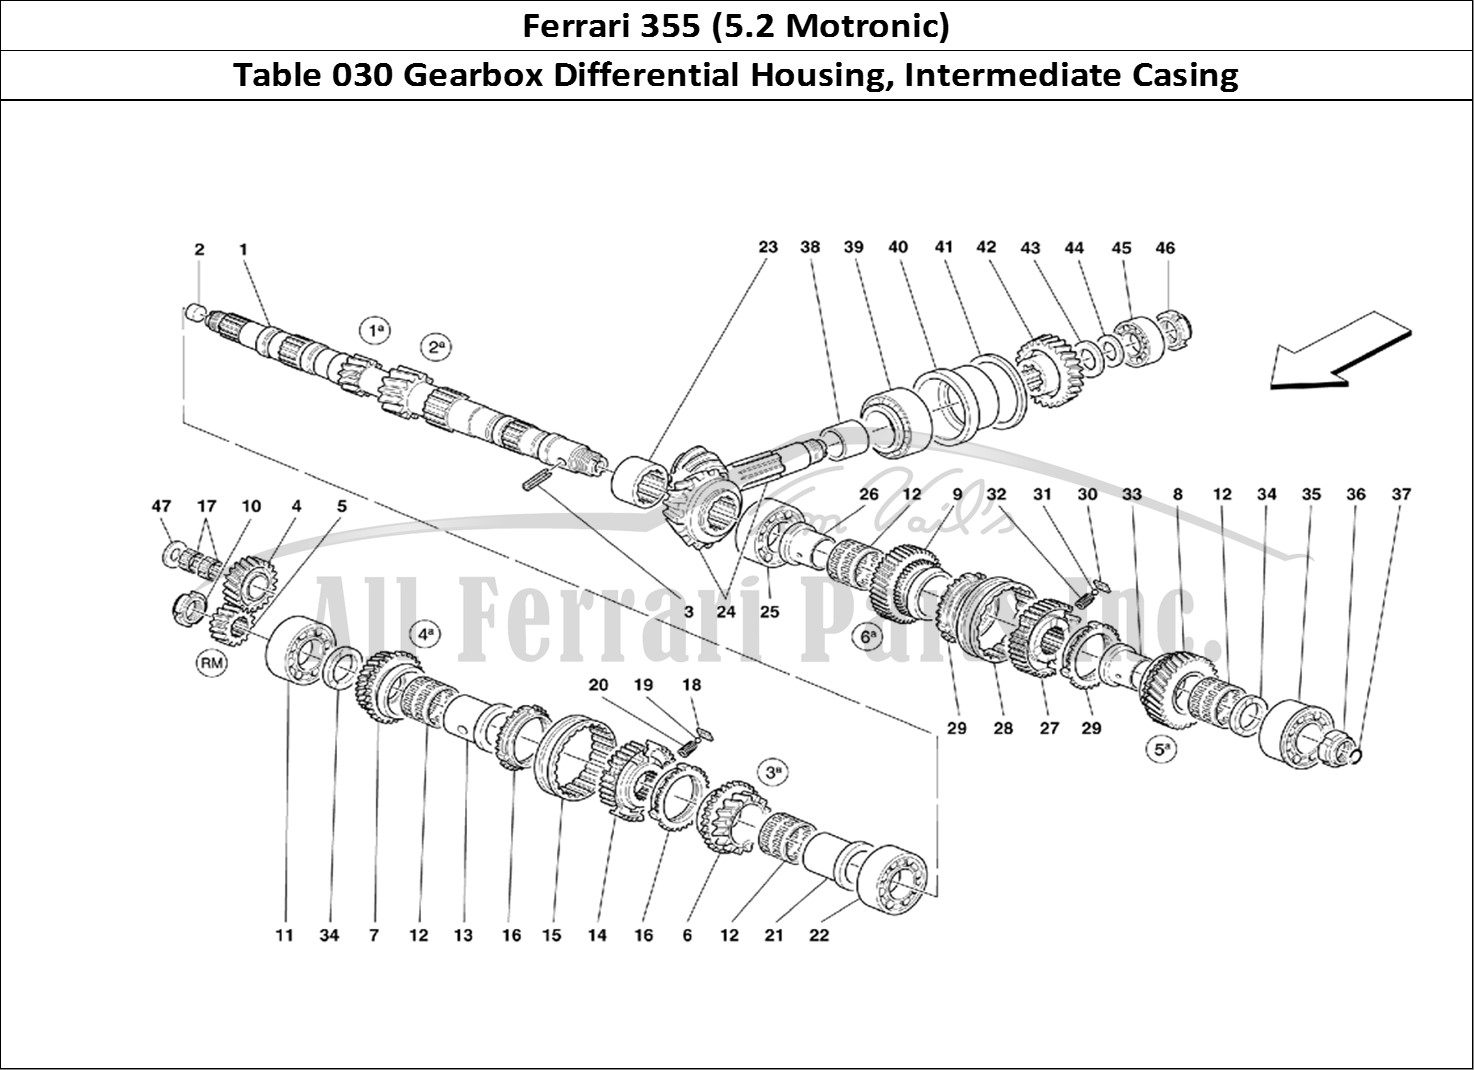 Ferrari Parts Ferrari 355 (5.2 Motronic) Page 030 Gearbox/Differential Hous